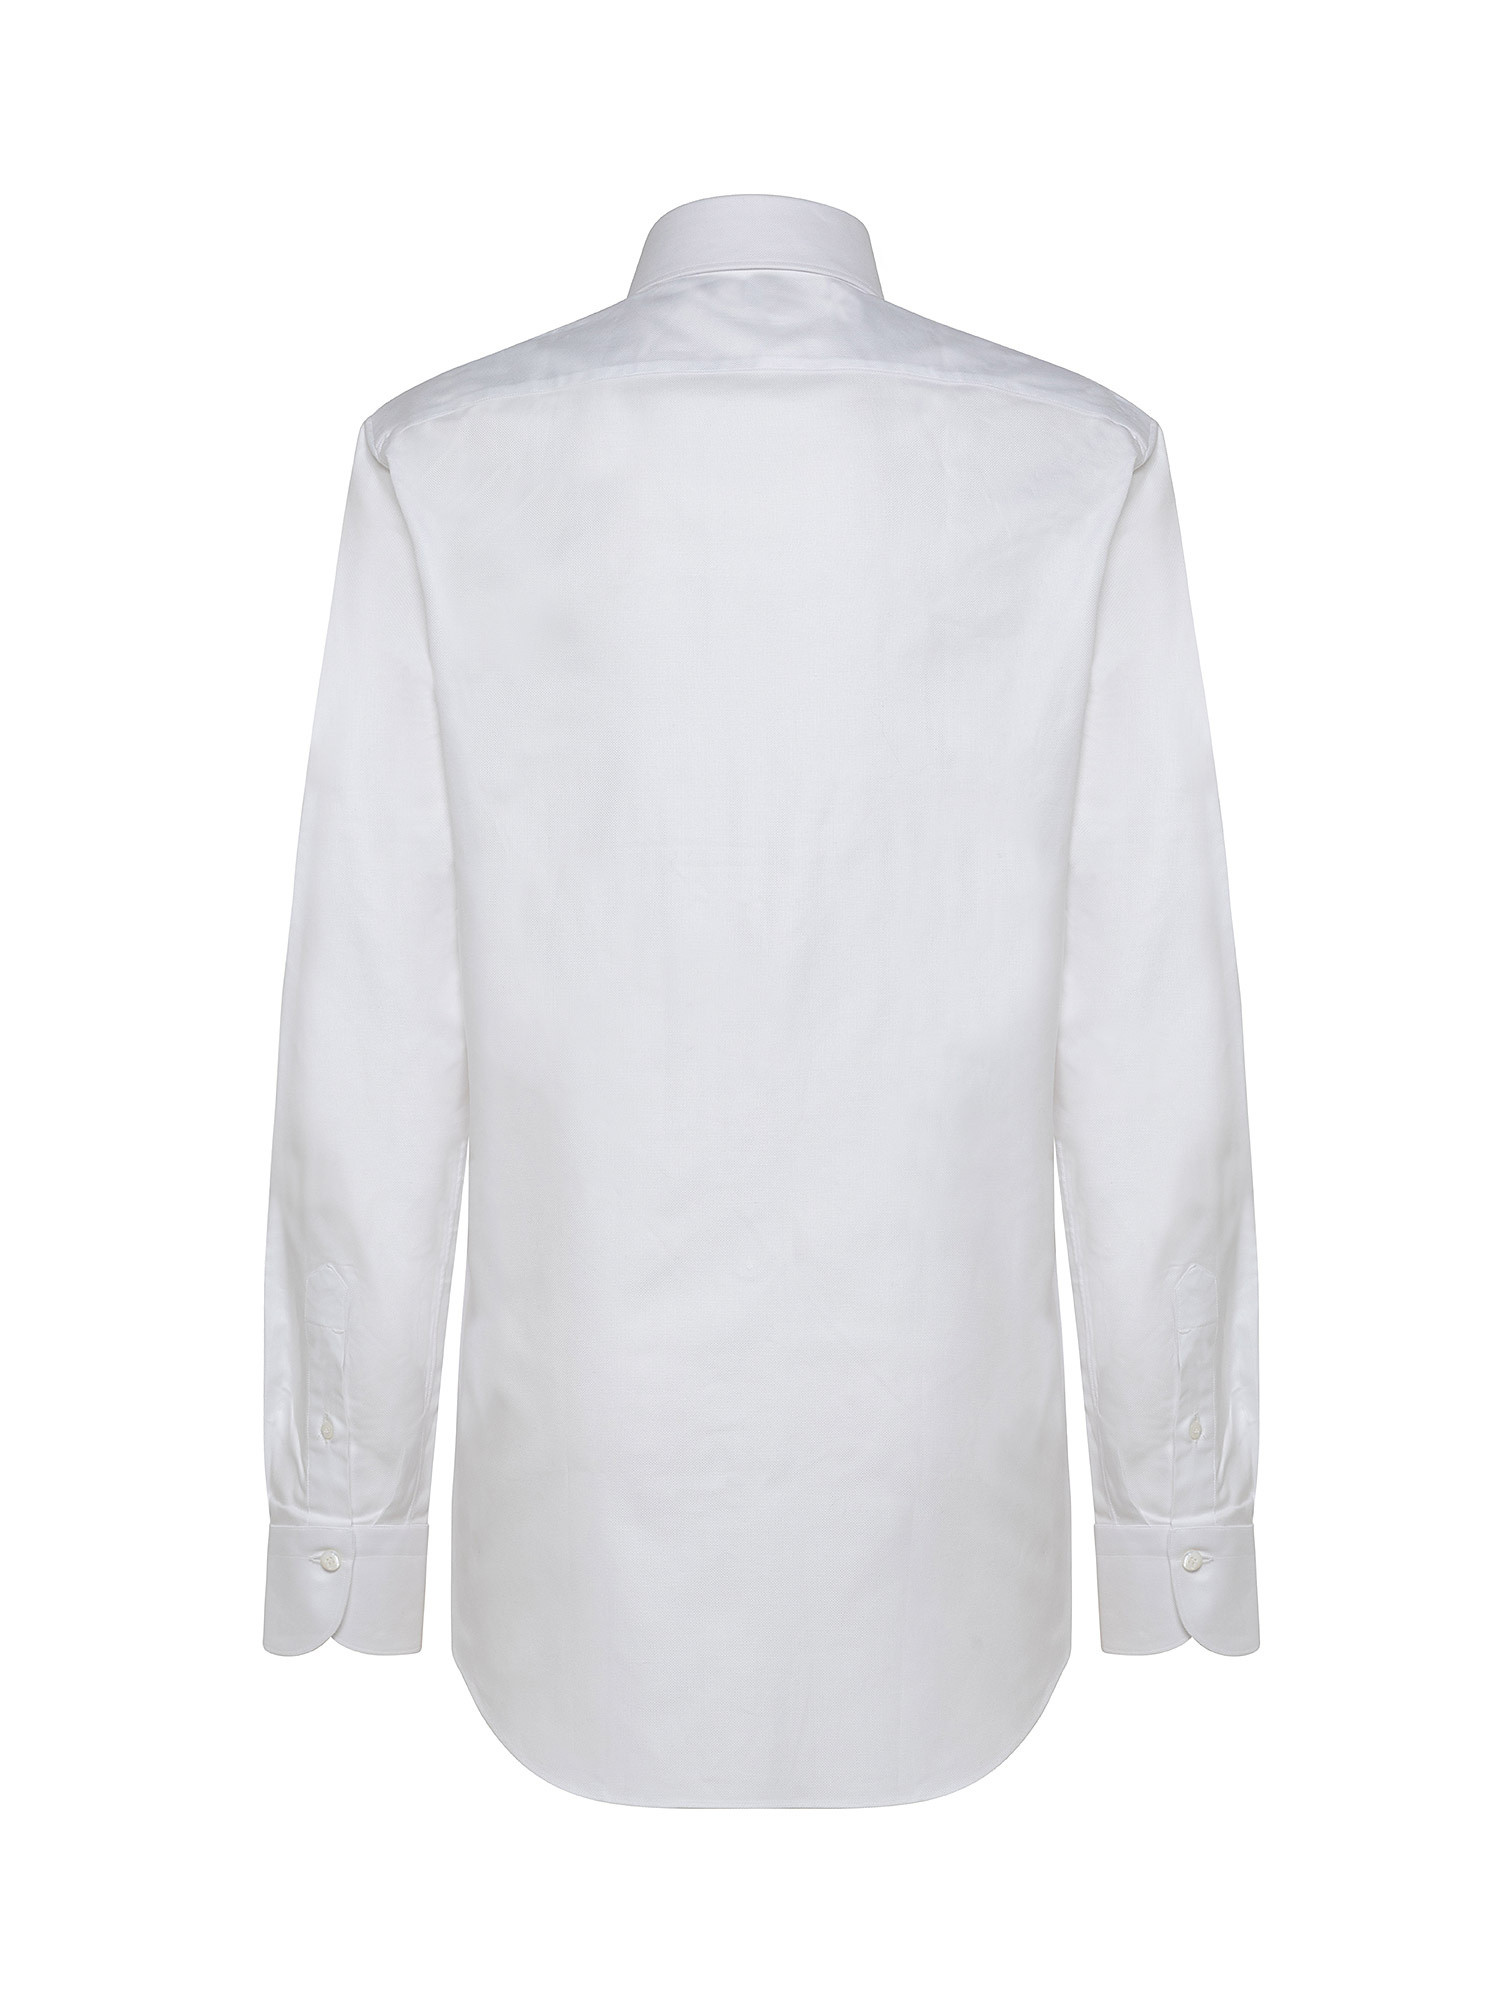 Men's slim fit shirt, White, large image number 1